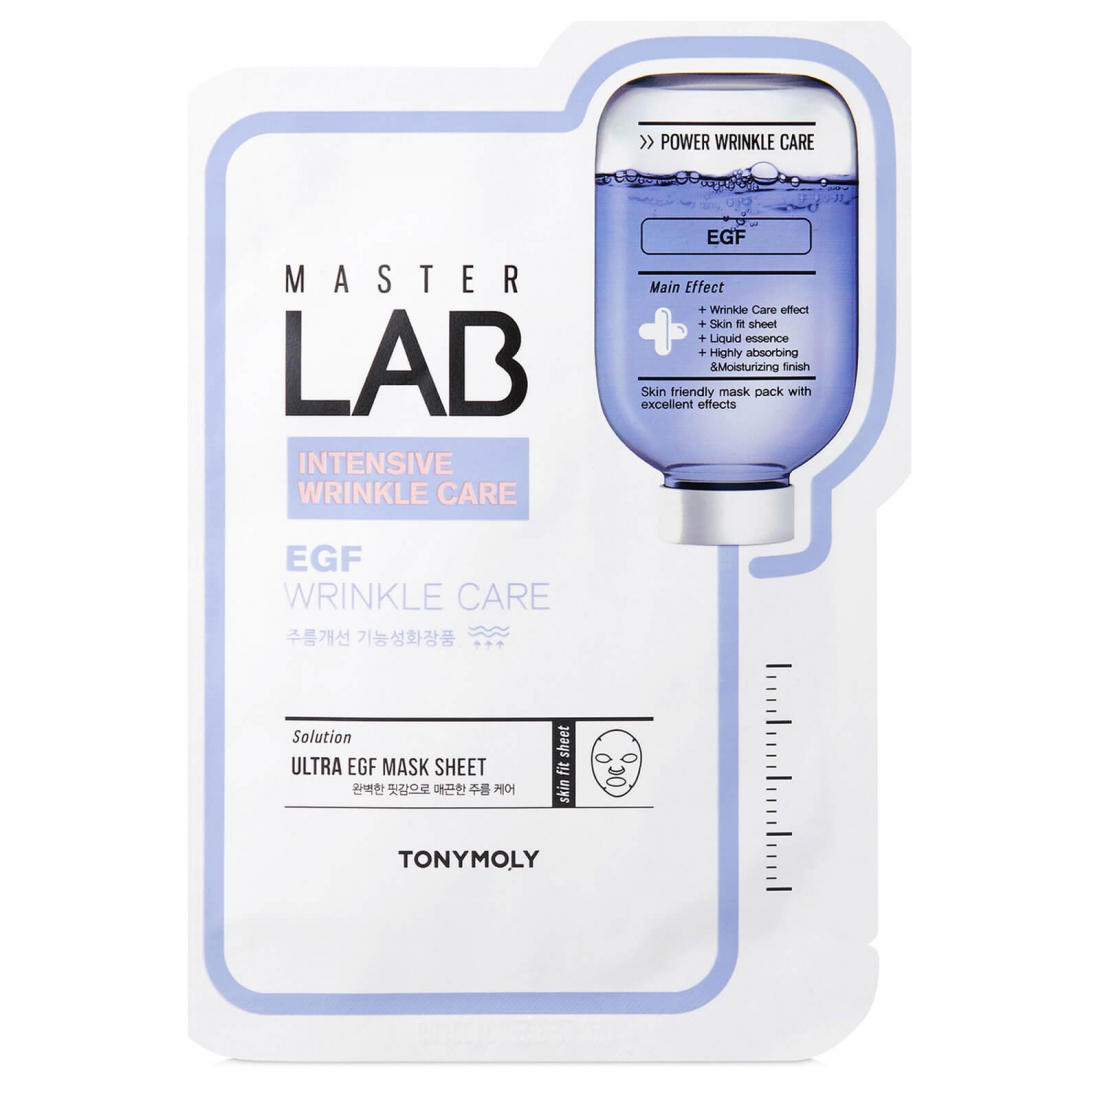 'Master Lab Egf' Face Tissue Mask - 19 g